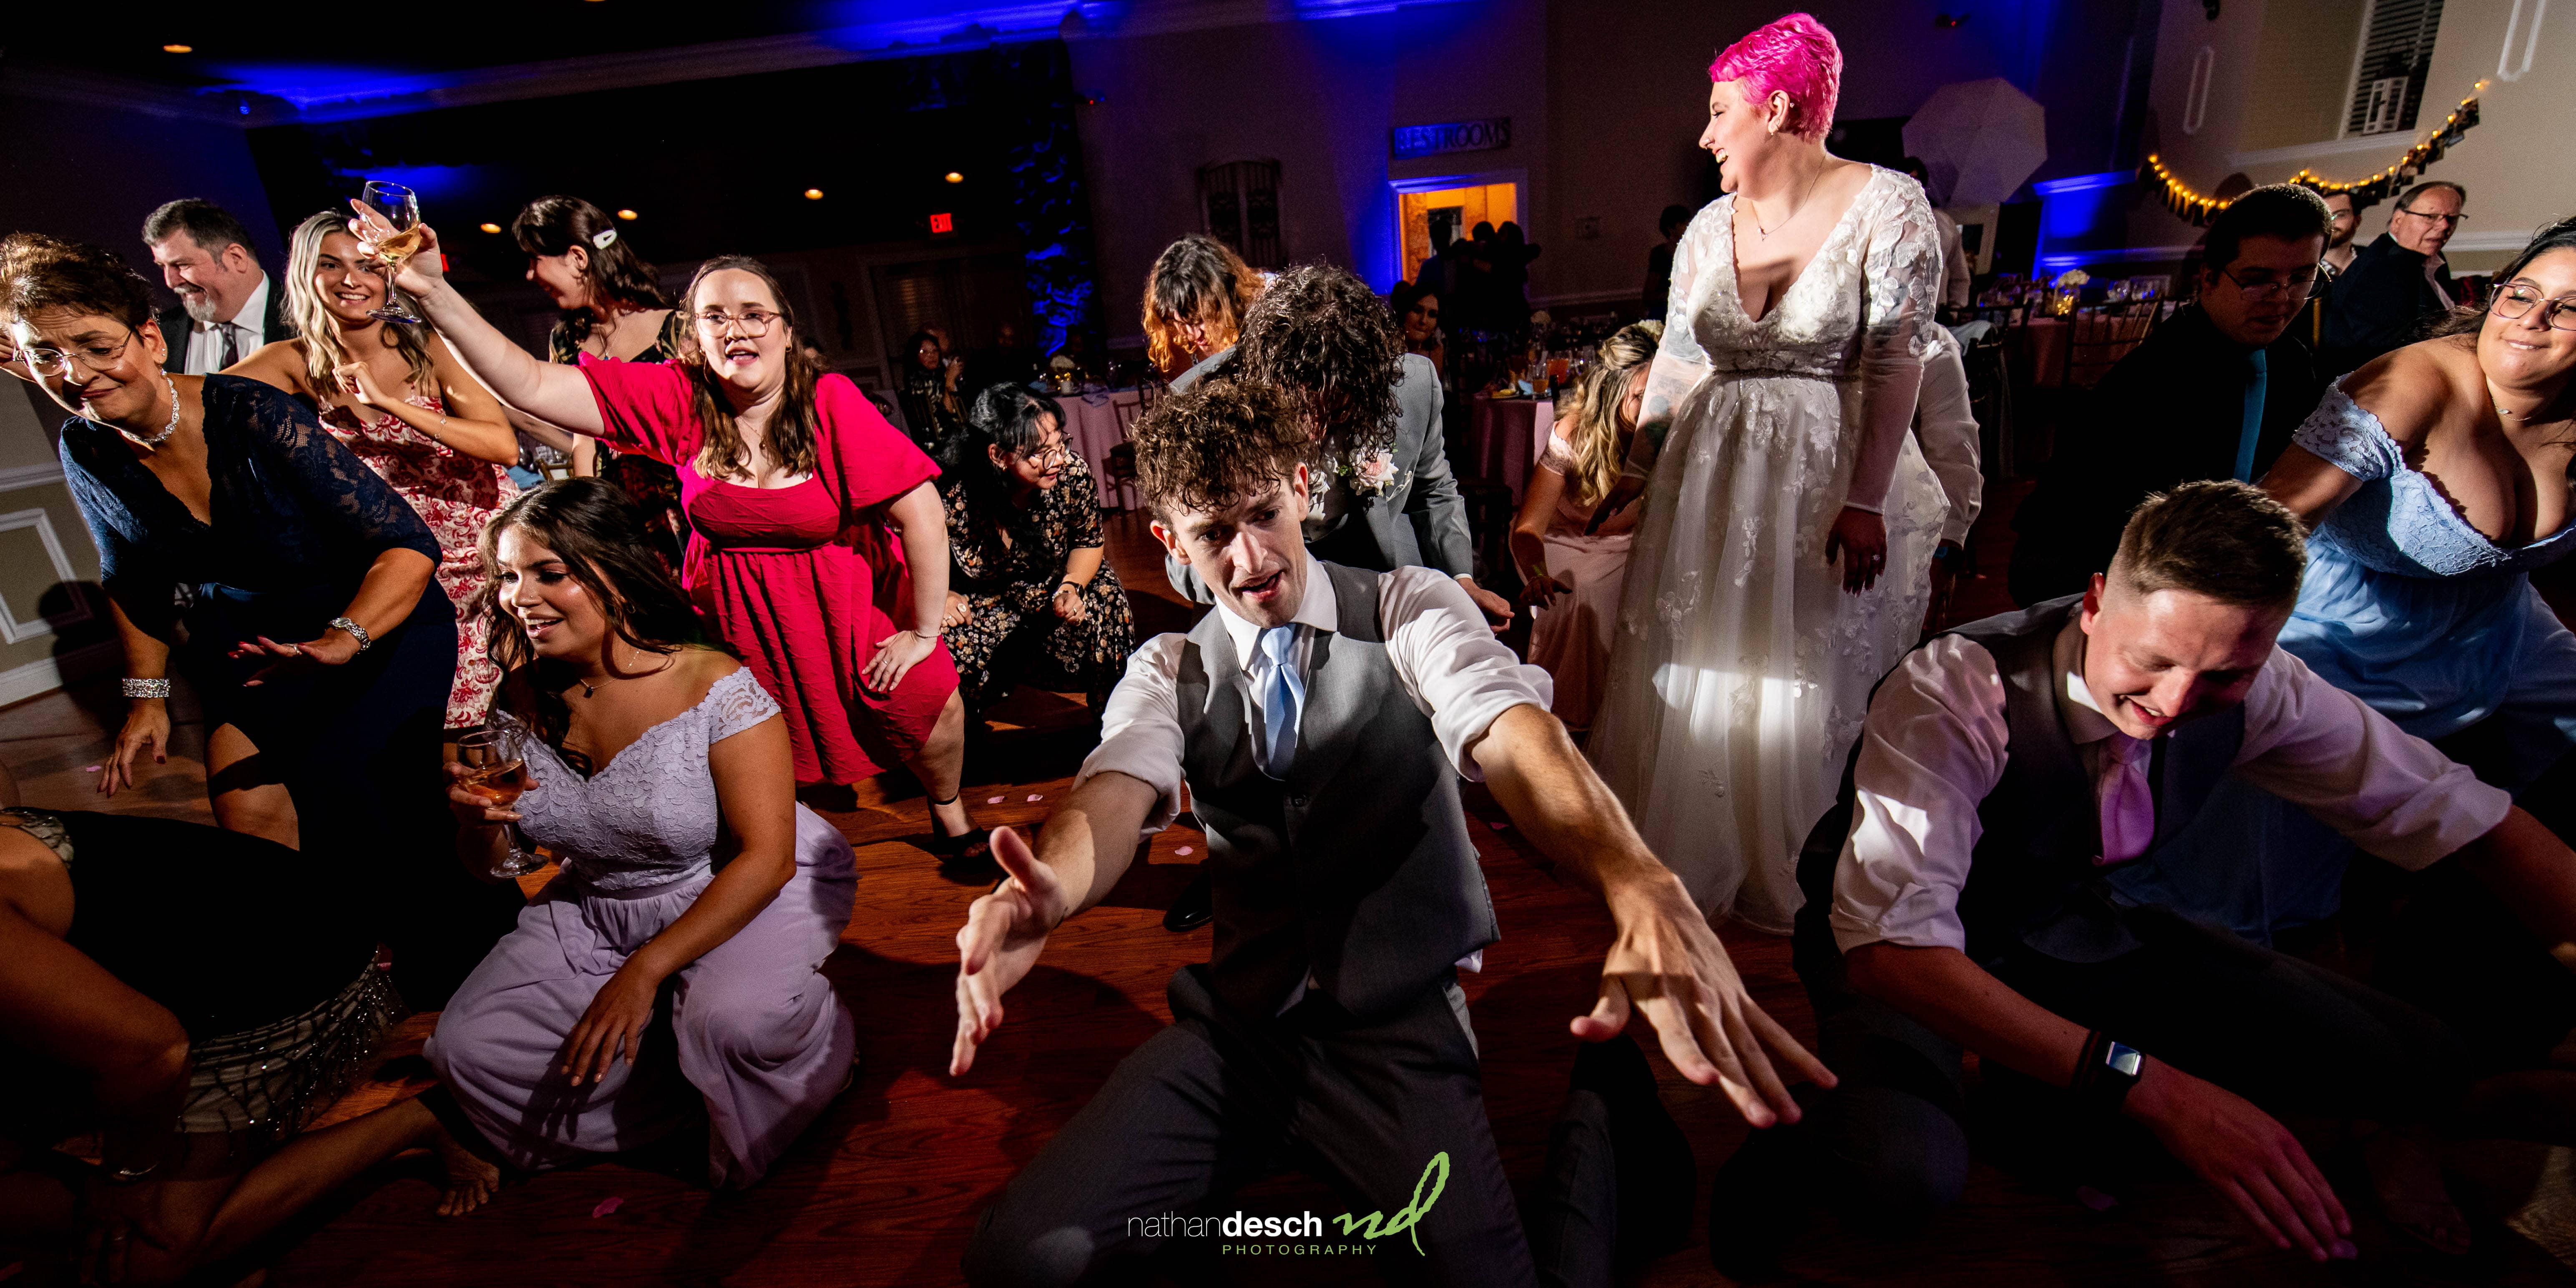 crazy dancing at wedding